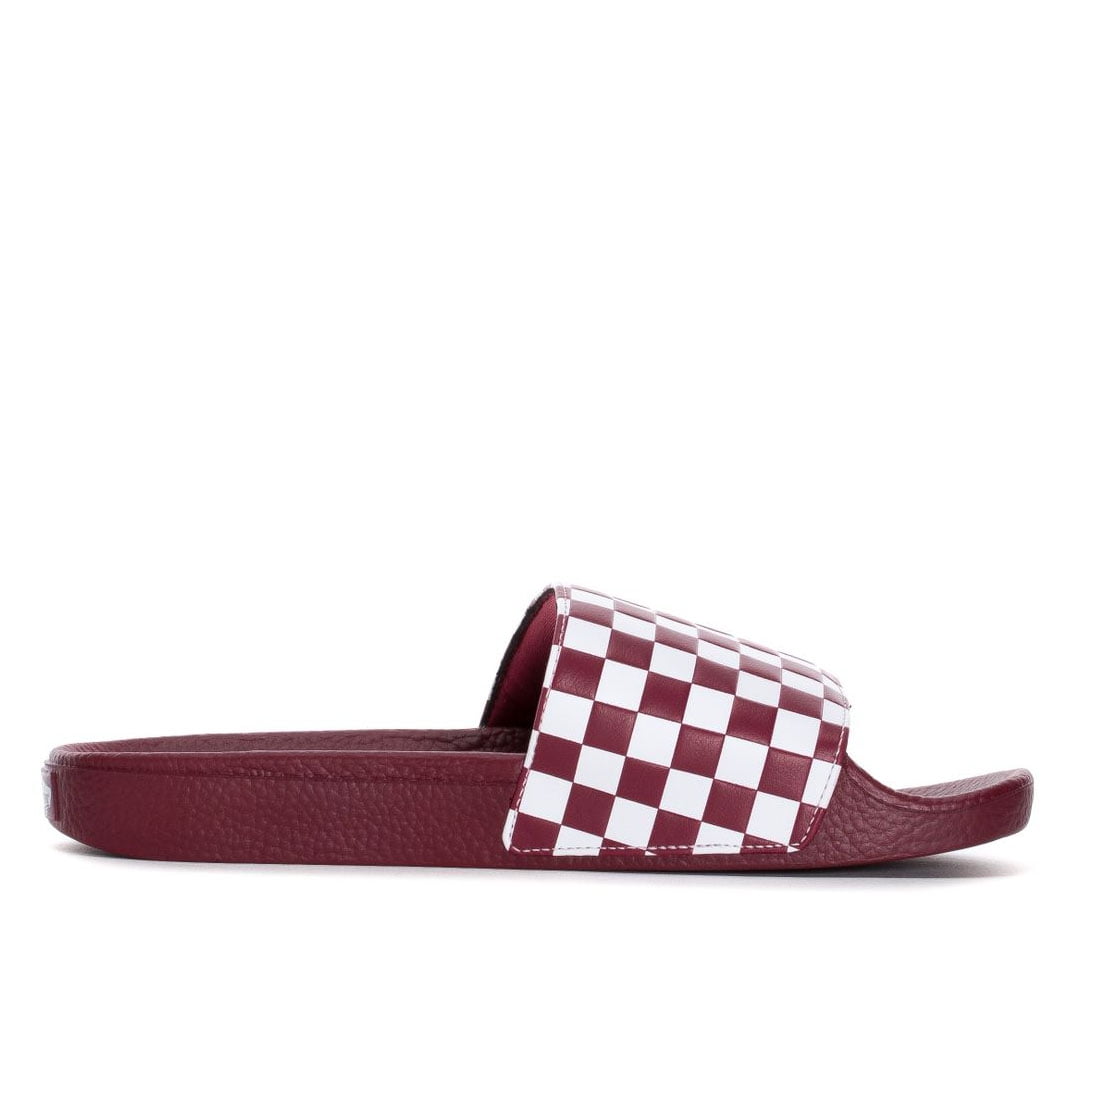 vans slippers checkerboard